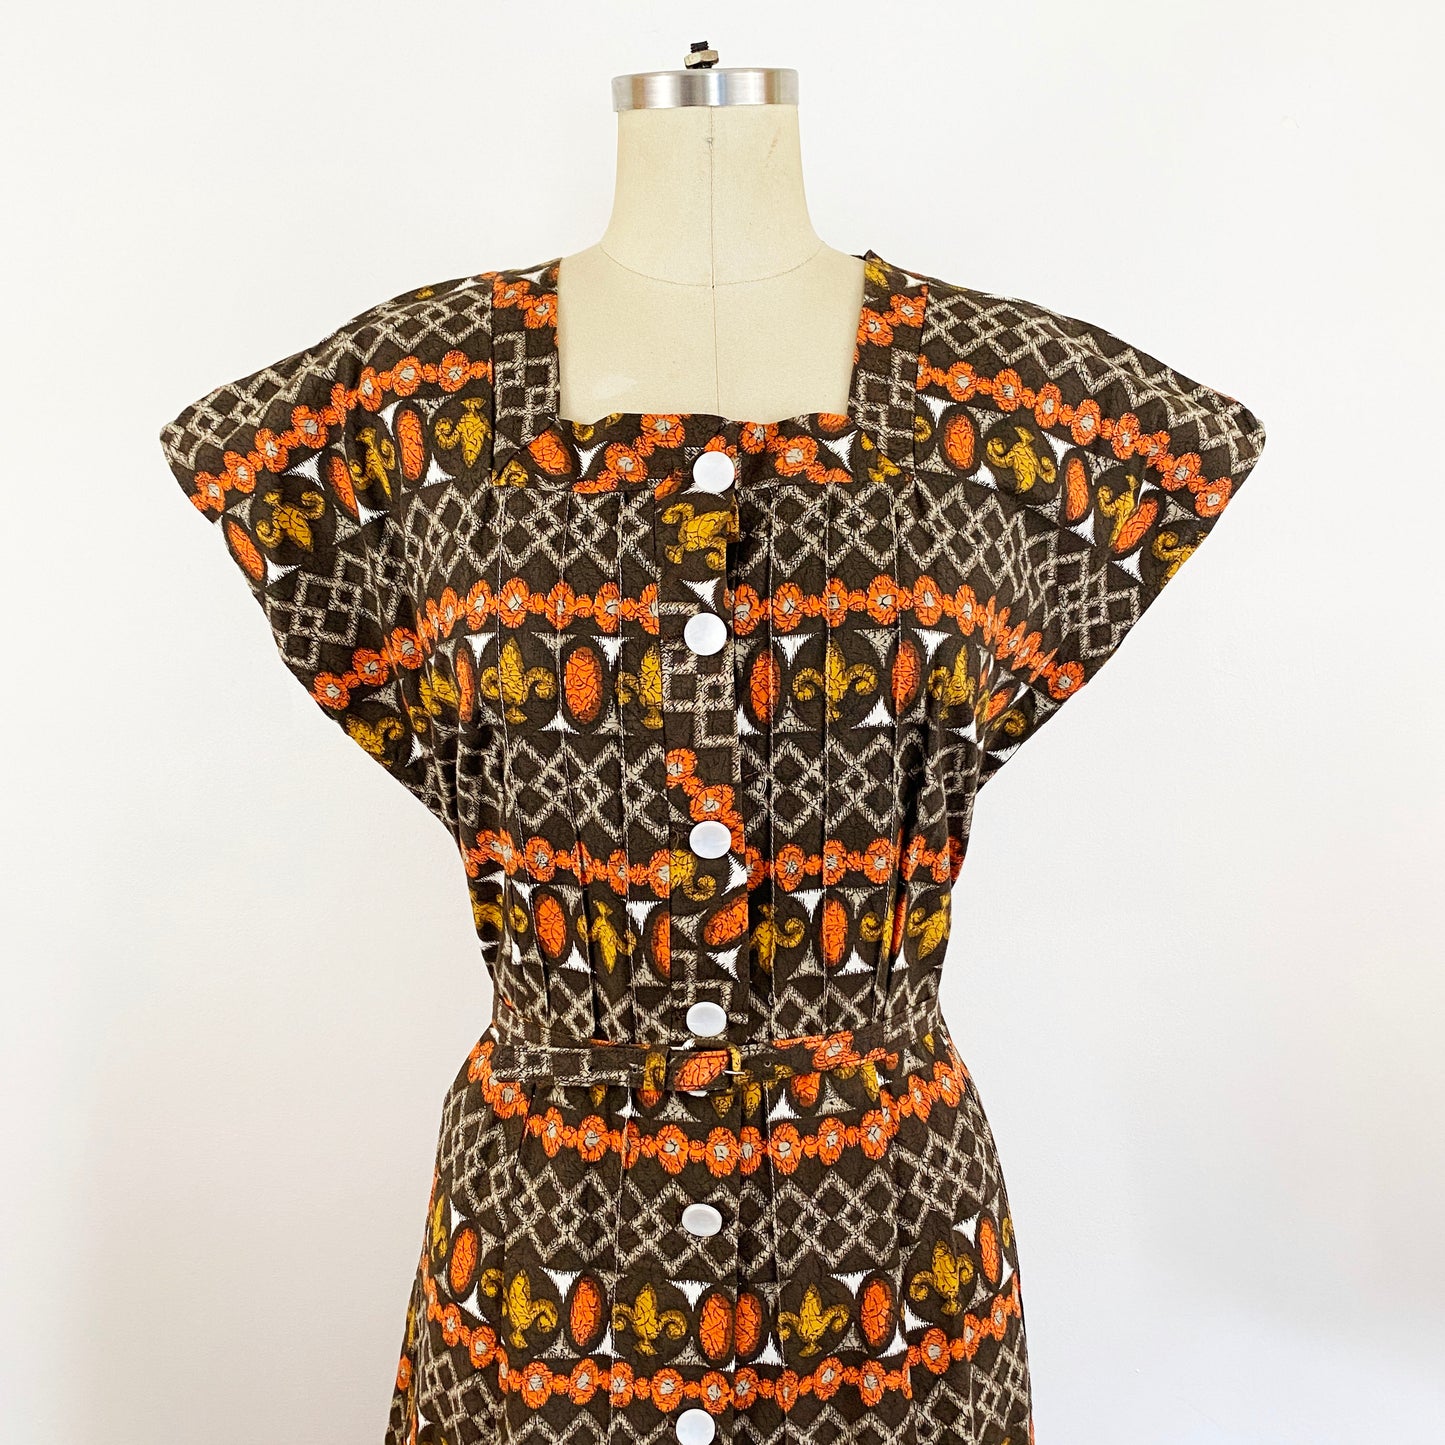 1950s Top Mode Frocks Batik Fleur De Lis Cotton A-line Shirt Dress Brown Orange Day Dress / Vintage Plus Size 0X 14/16